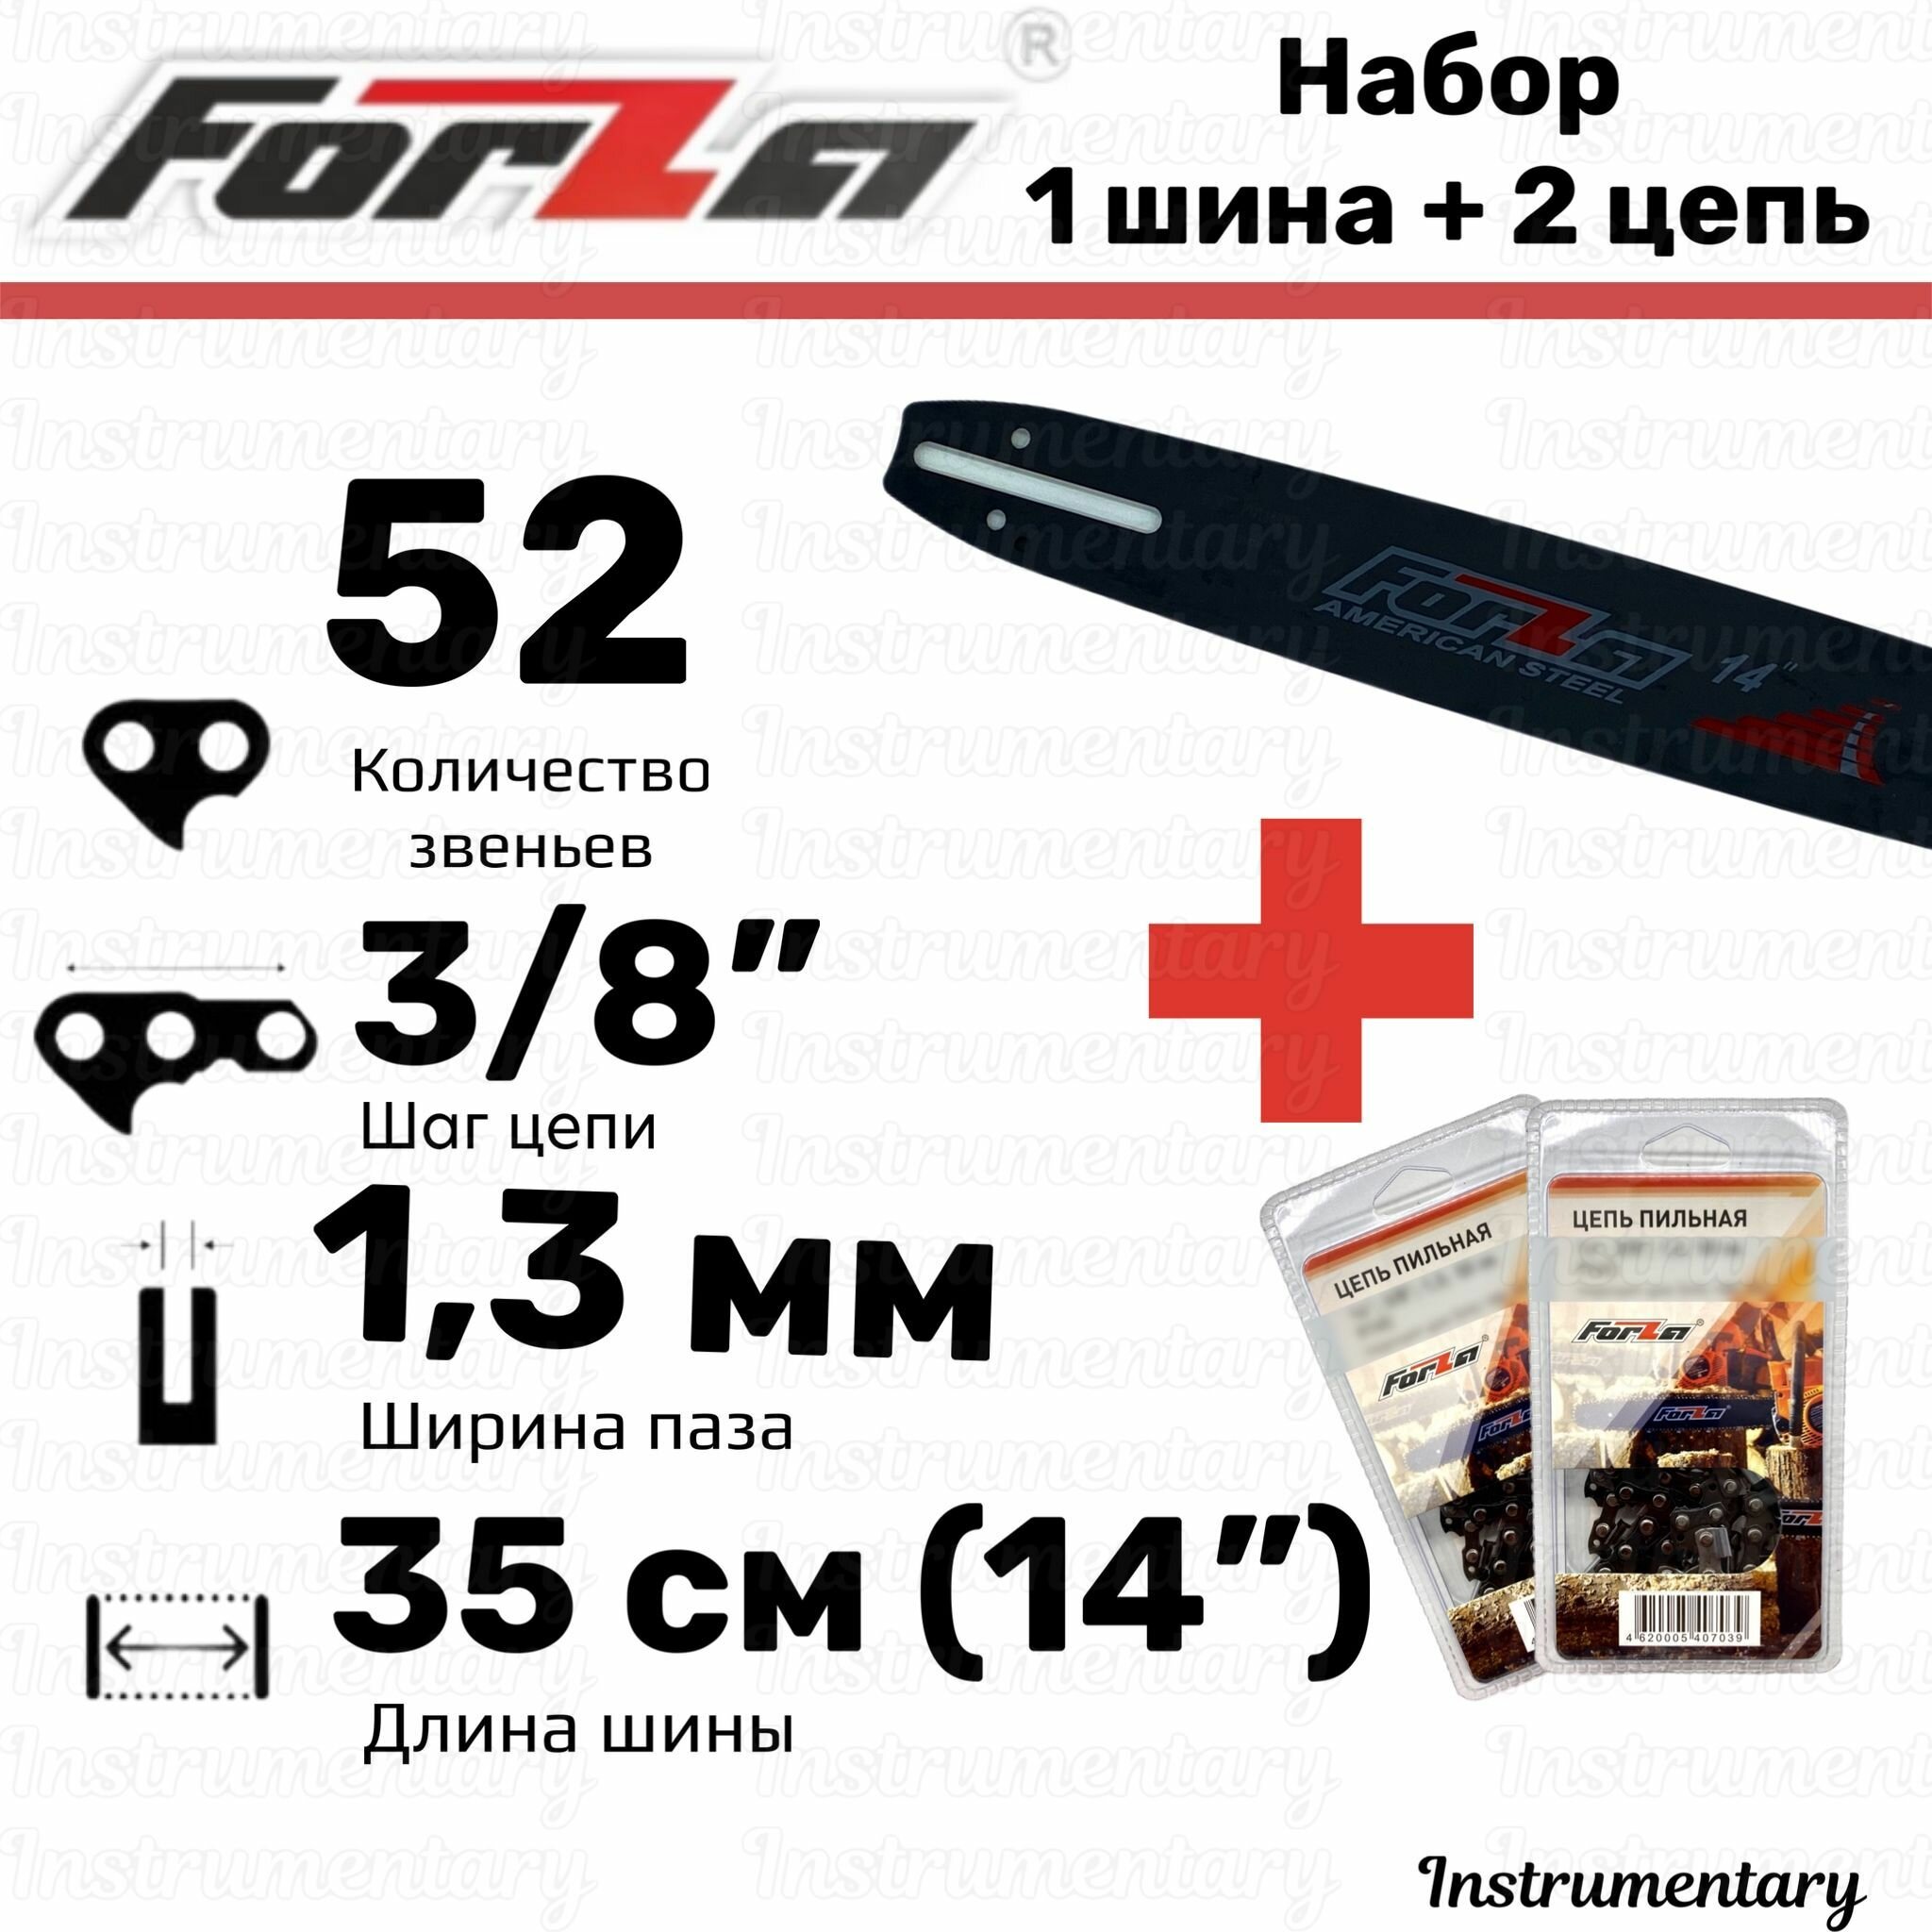 Forza Набор шина + 2 цепи для бензопилы Husqvarna Partner Poulan и др 14"-52зв шаг 3/8" ширина 13 мм